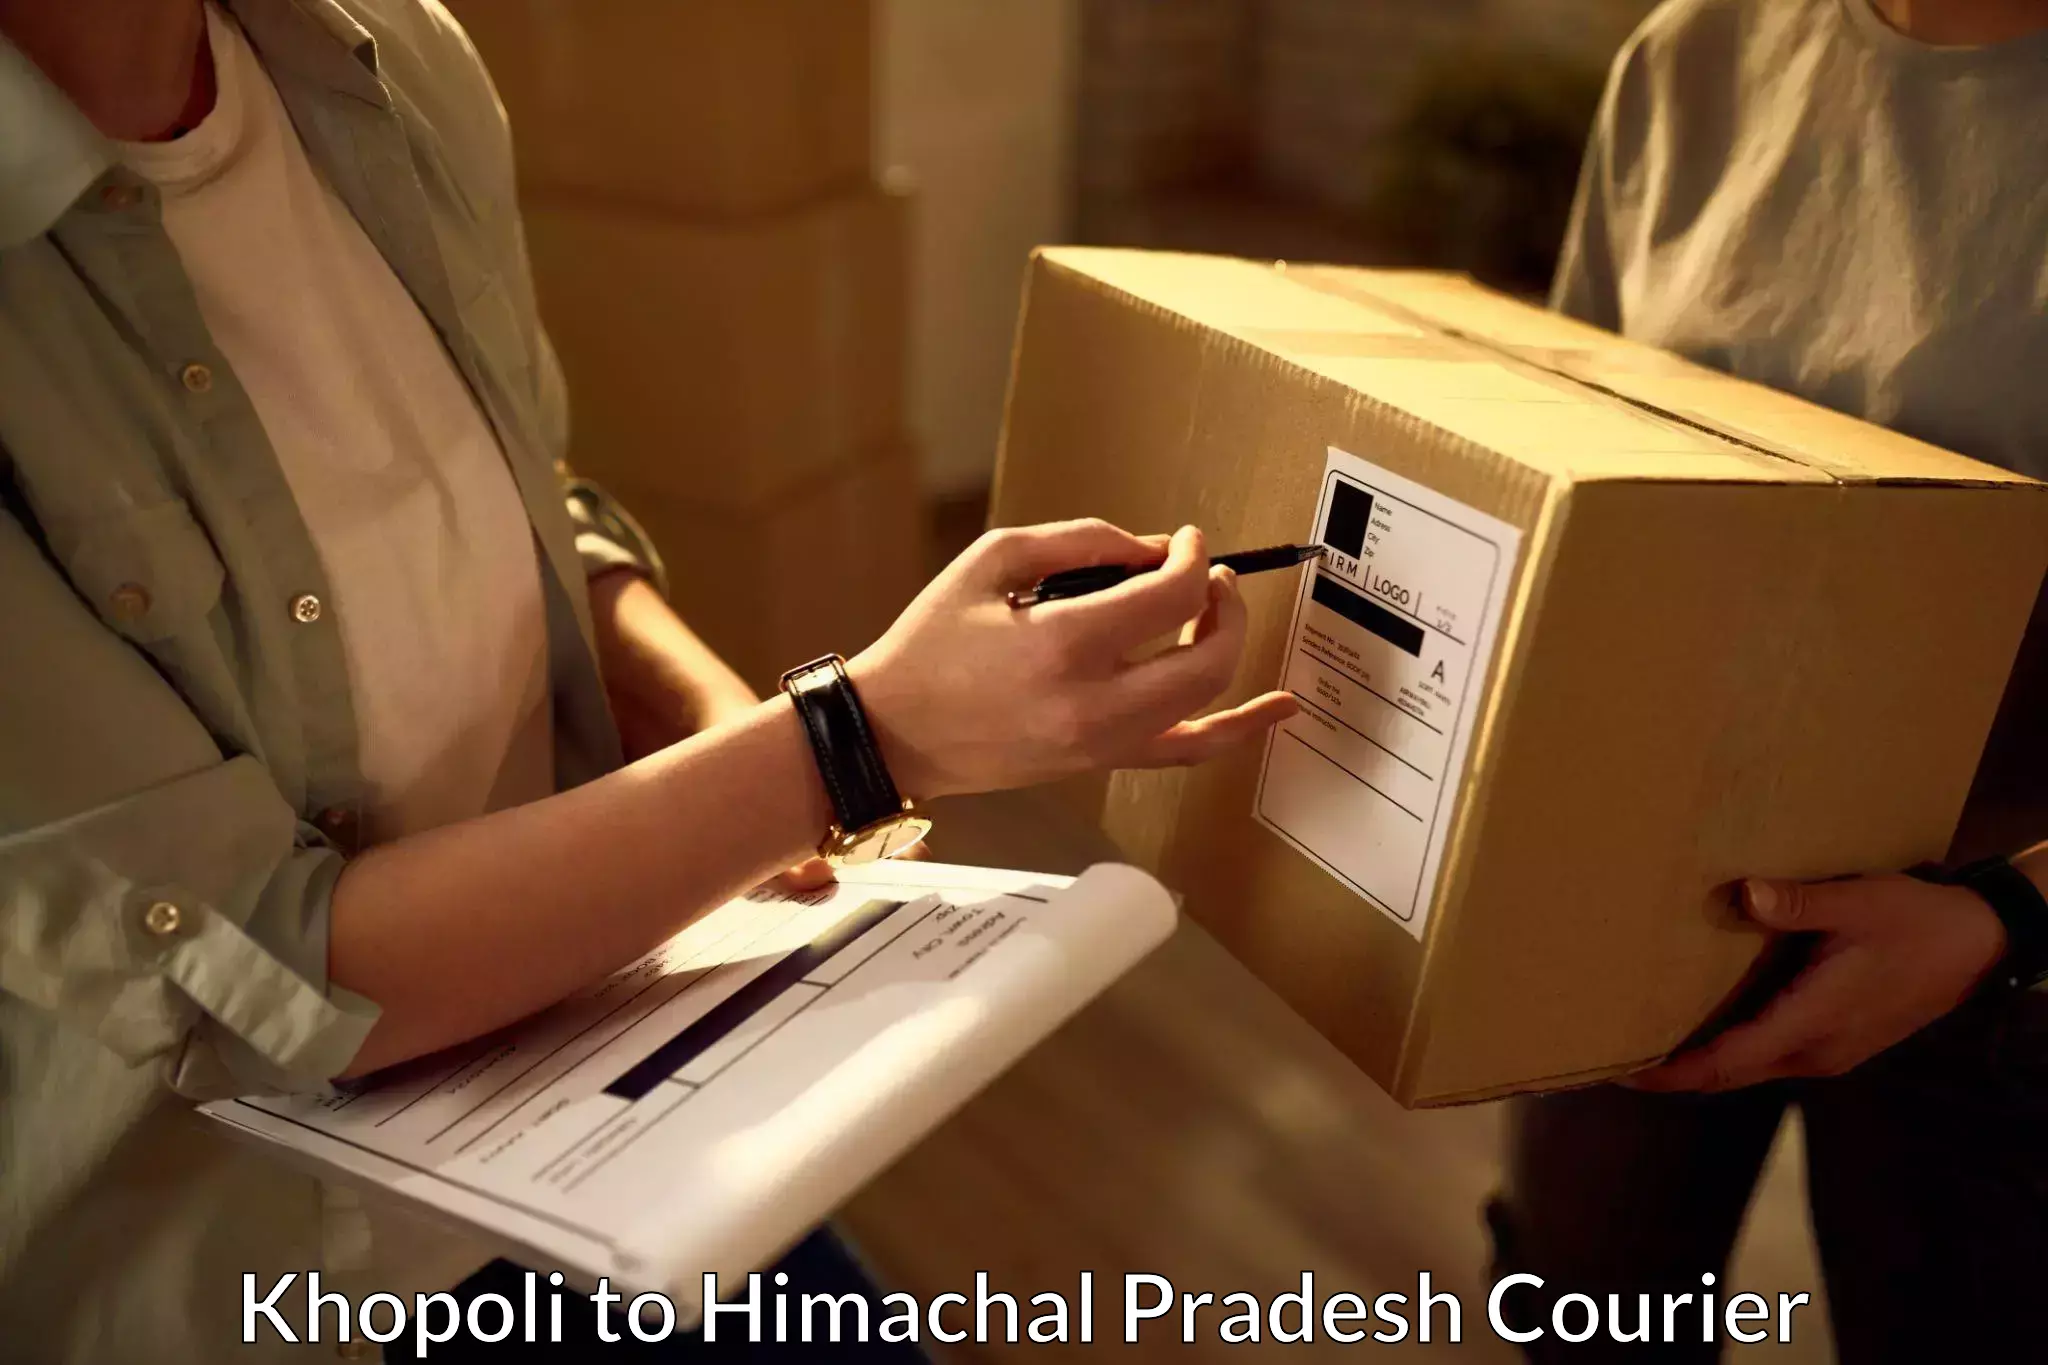 Cash on delivery service Khopoli to Nalagarh